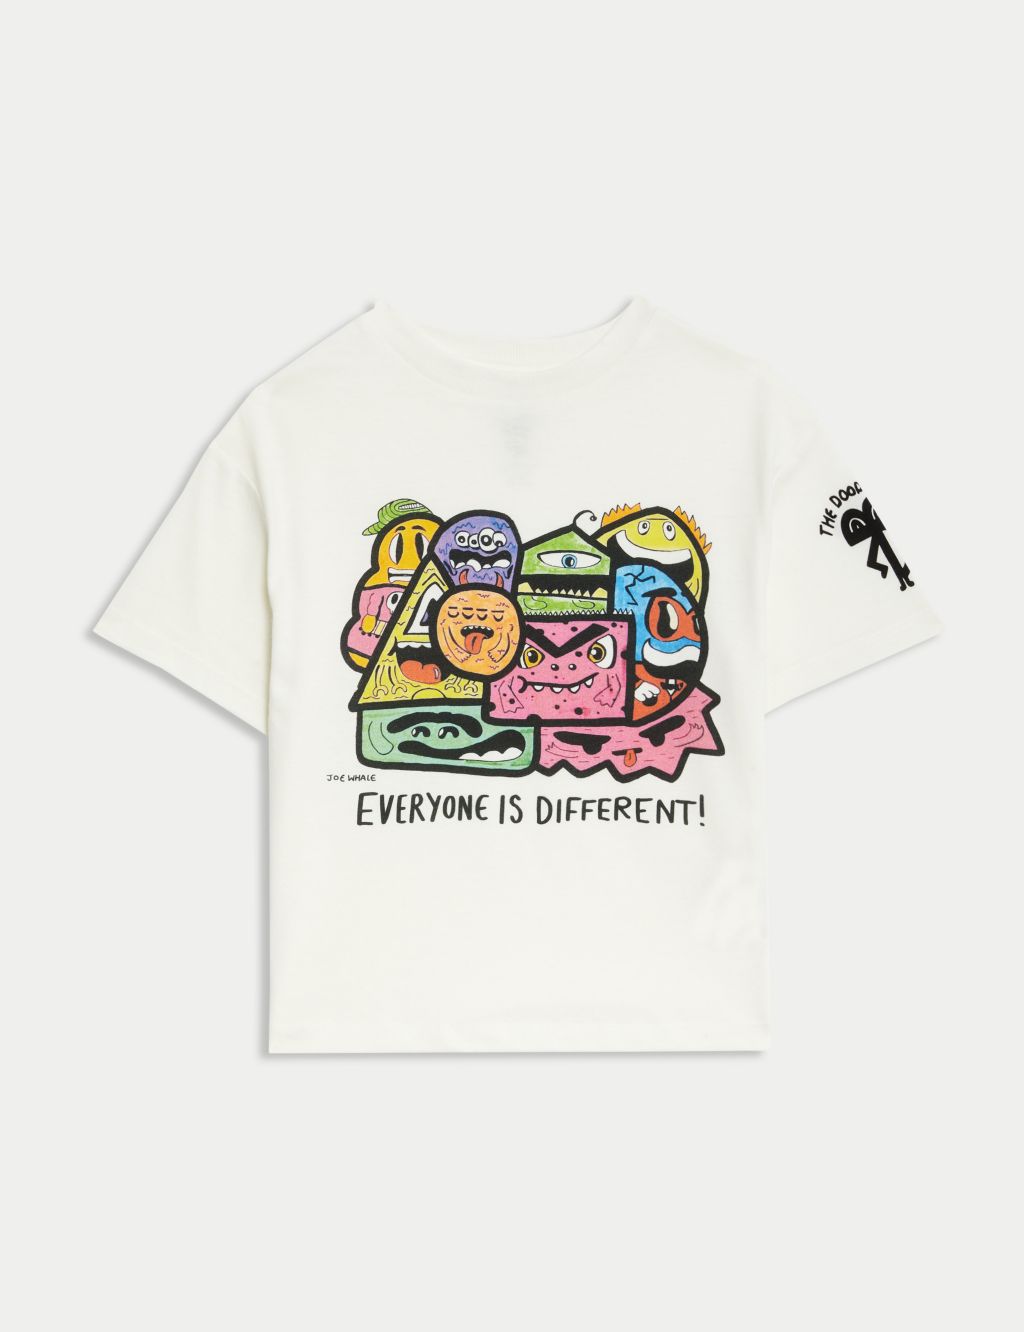 Pure Cotton The Doodle Boy™ T-Shirt (2-8 Yrs)